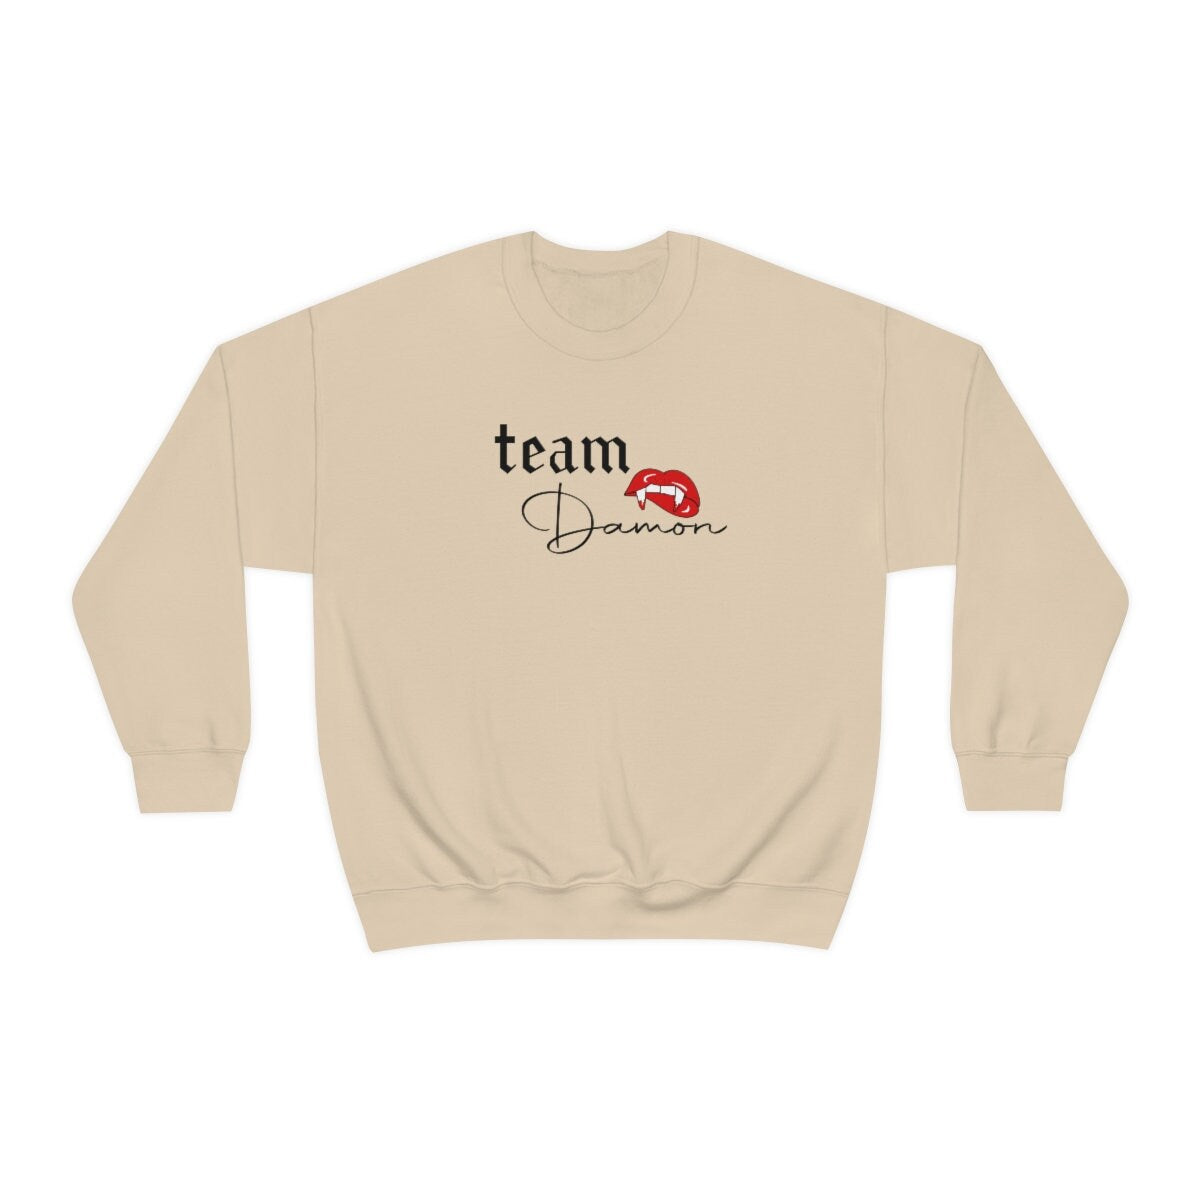 Team Damon Sweatshirt, TVD Sweatshirt, Damon Salvatore Sweatshirt, TVD fan gift, The Vampire Diaries Sweater, Vampire fan gift